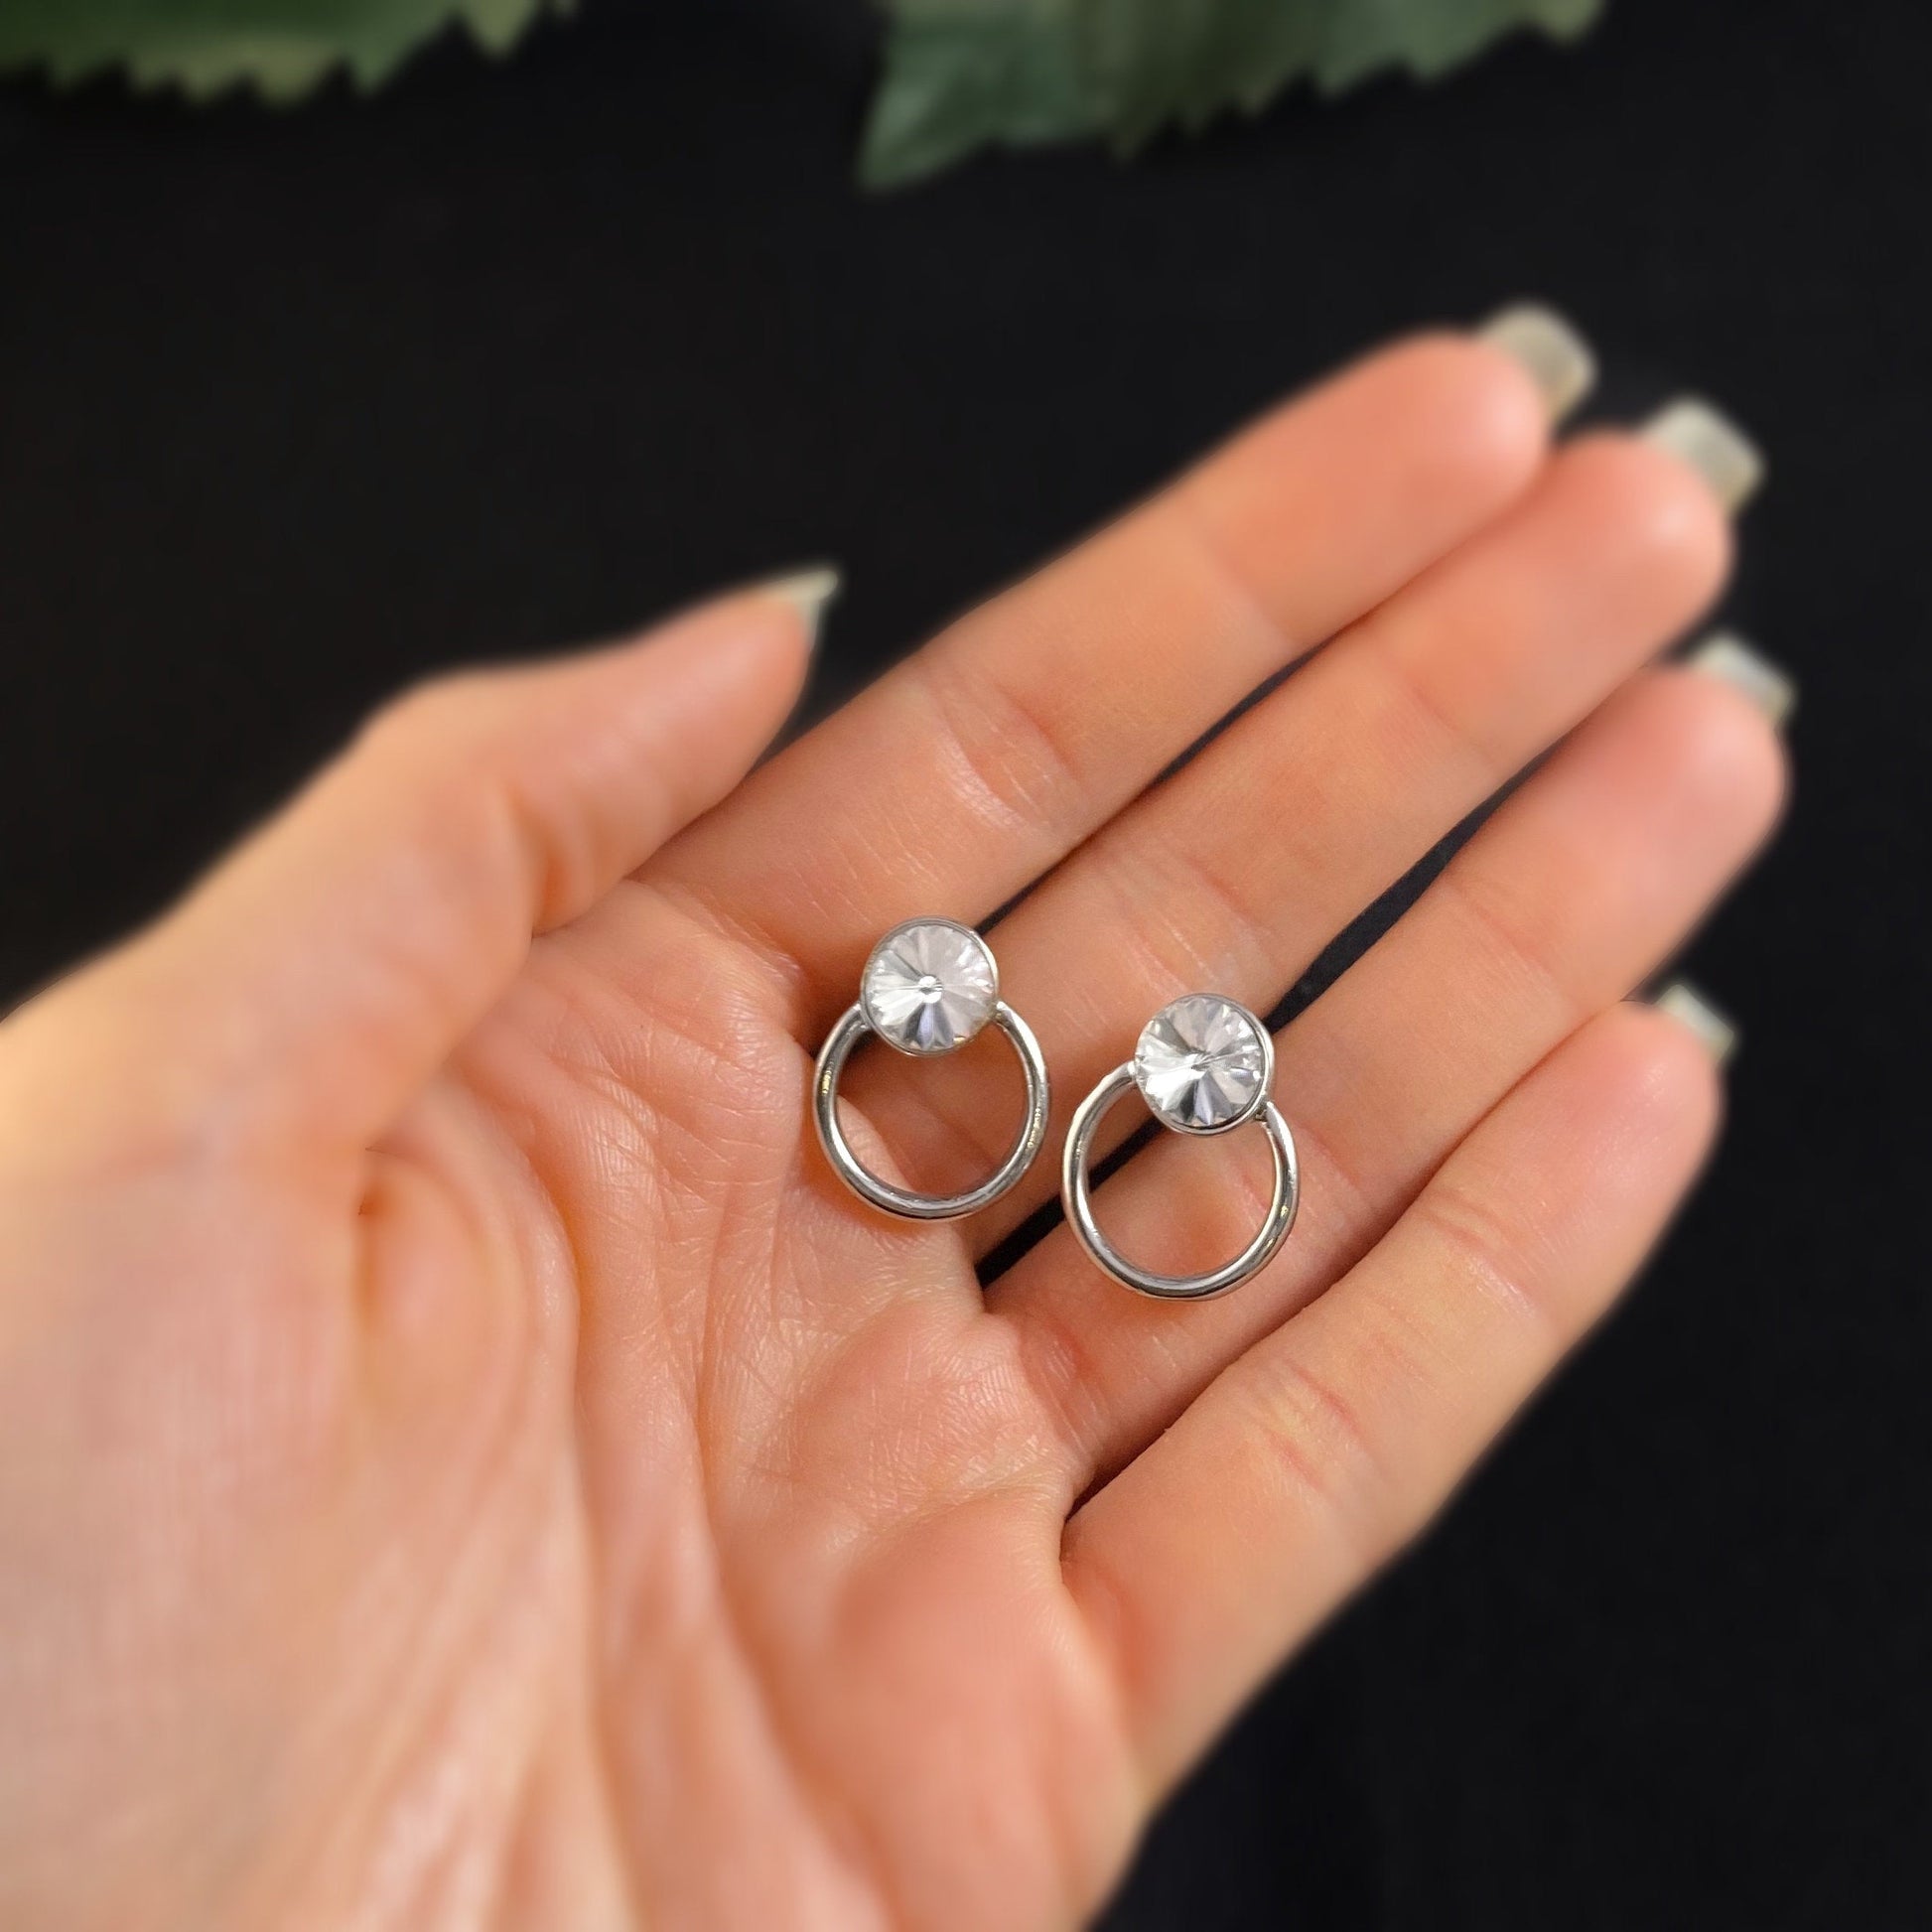 Small Silver Hoop Earrings with Czech Crystal - Handmade Nickel Free Ulla Jewelry